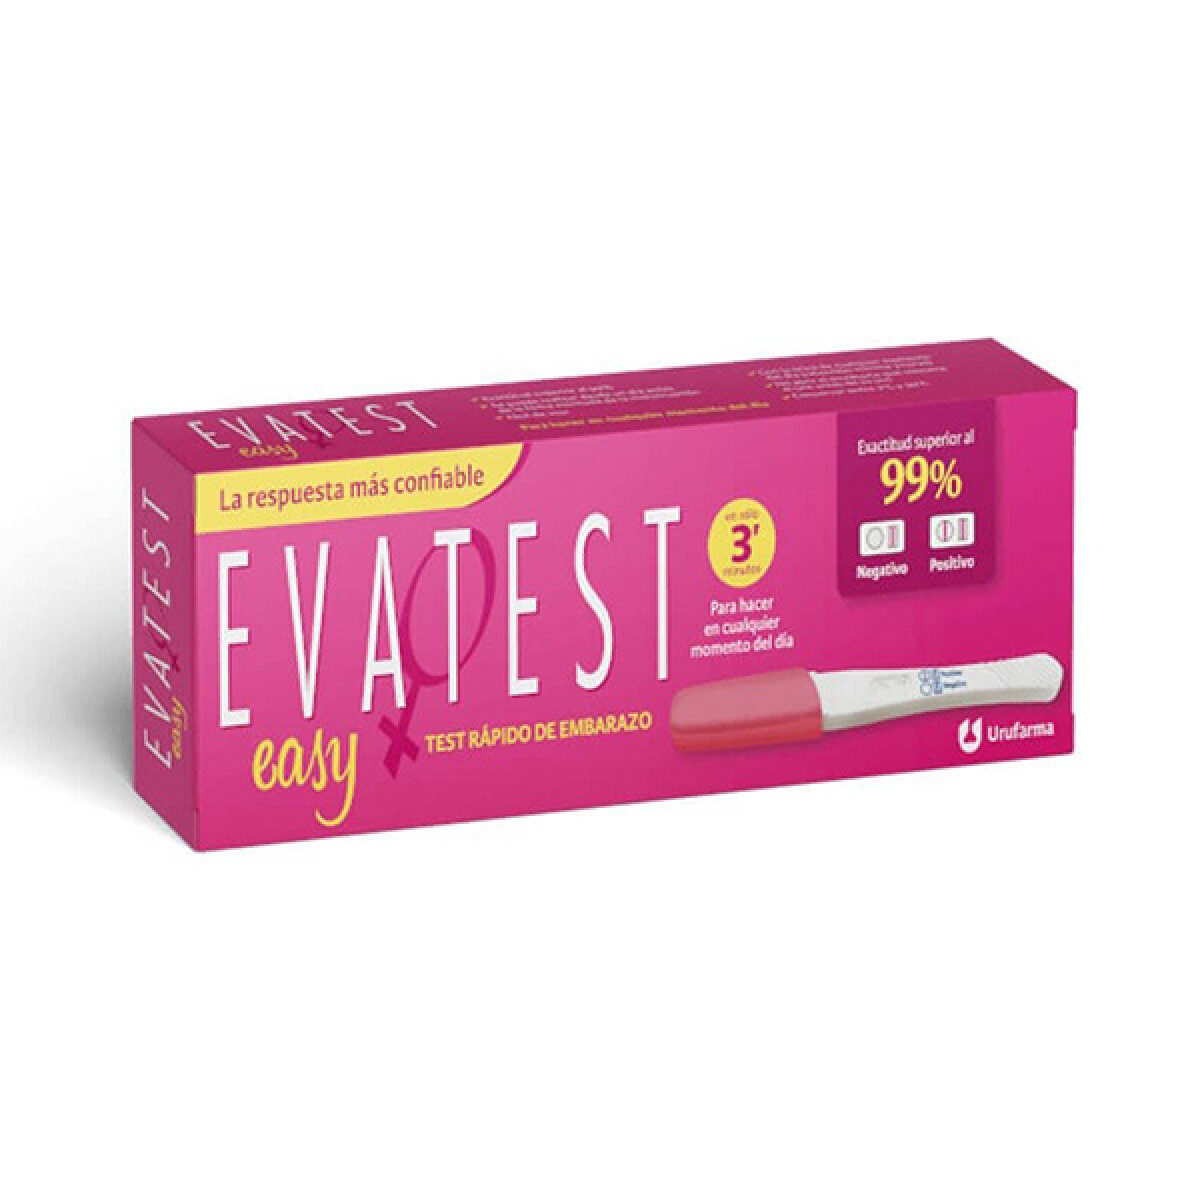 Evatest test de embarazo - Easy test 